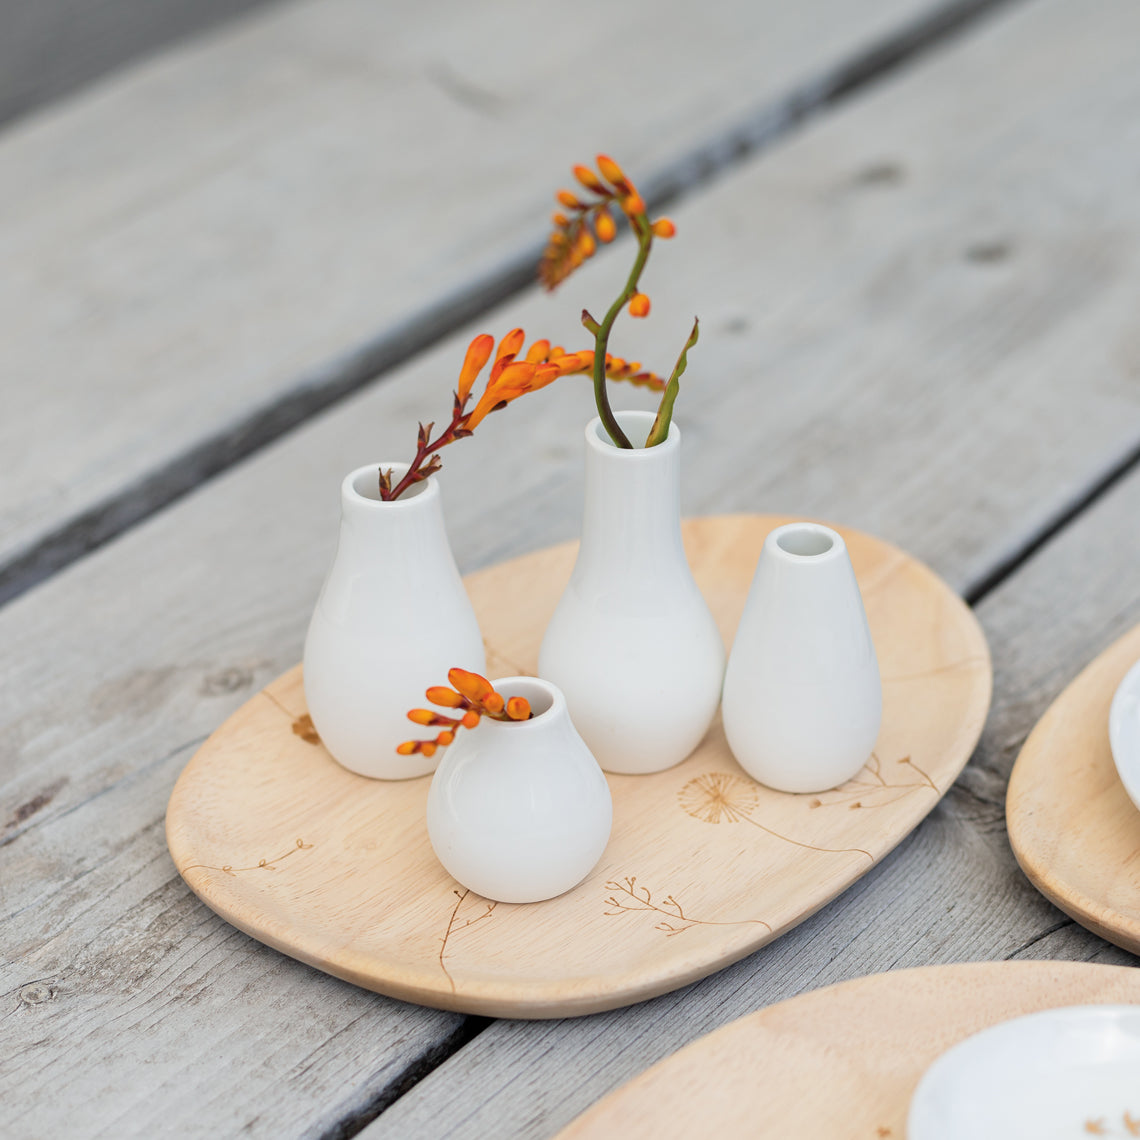 Set of Four Pastel Mini Vases